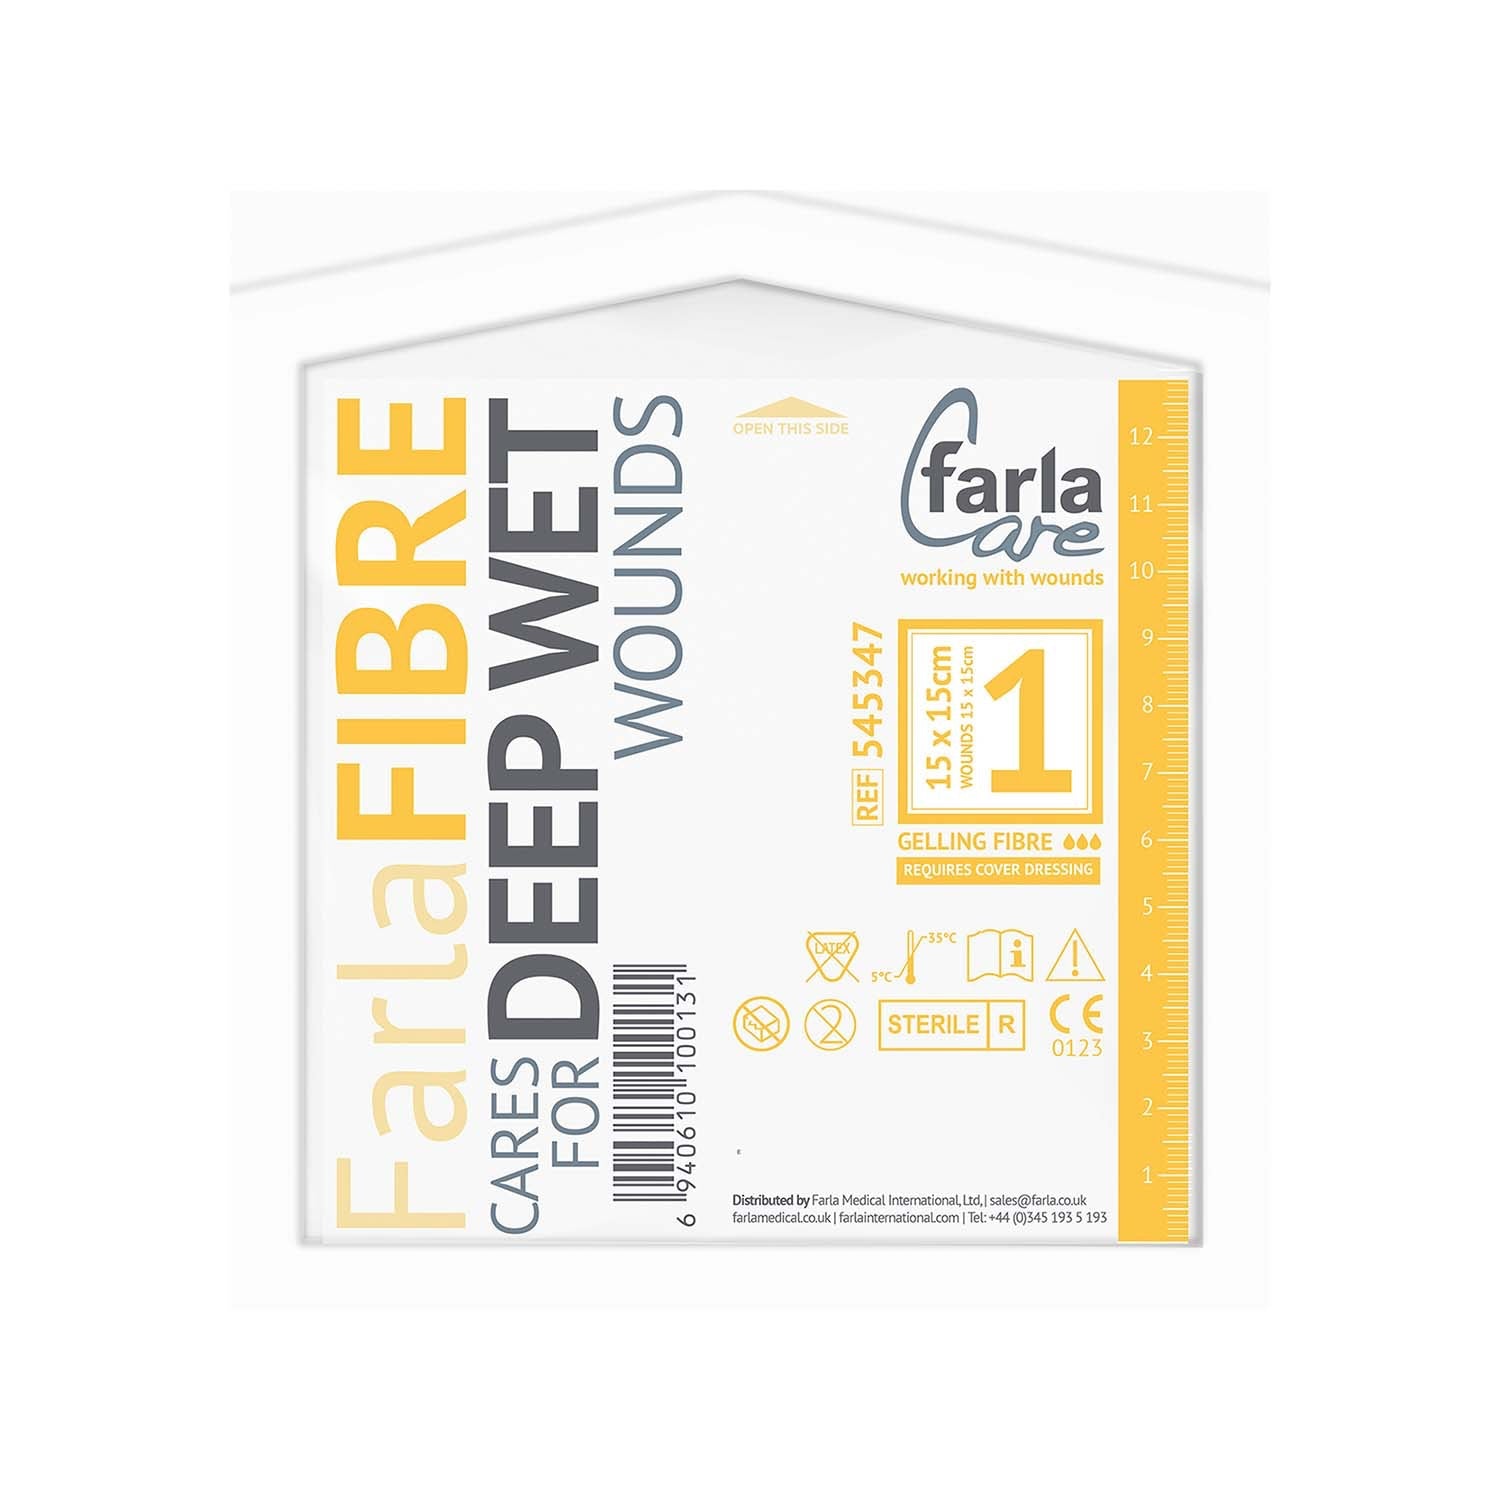 FarlaFIBRE Gelling Fibre | 15 x 15cm | Pack of 5 (2)